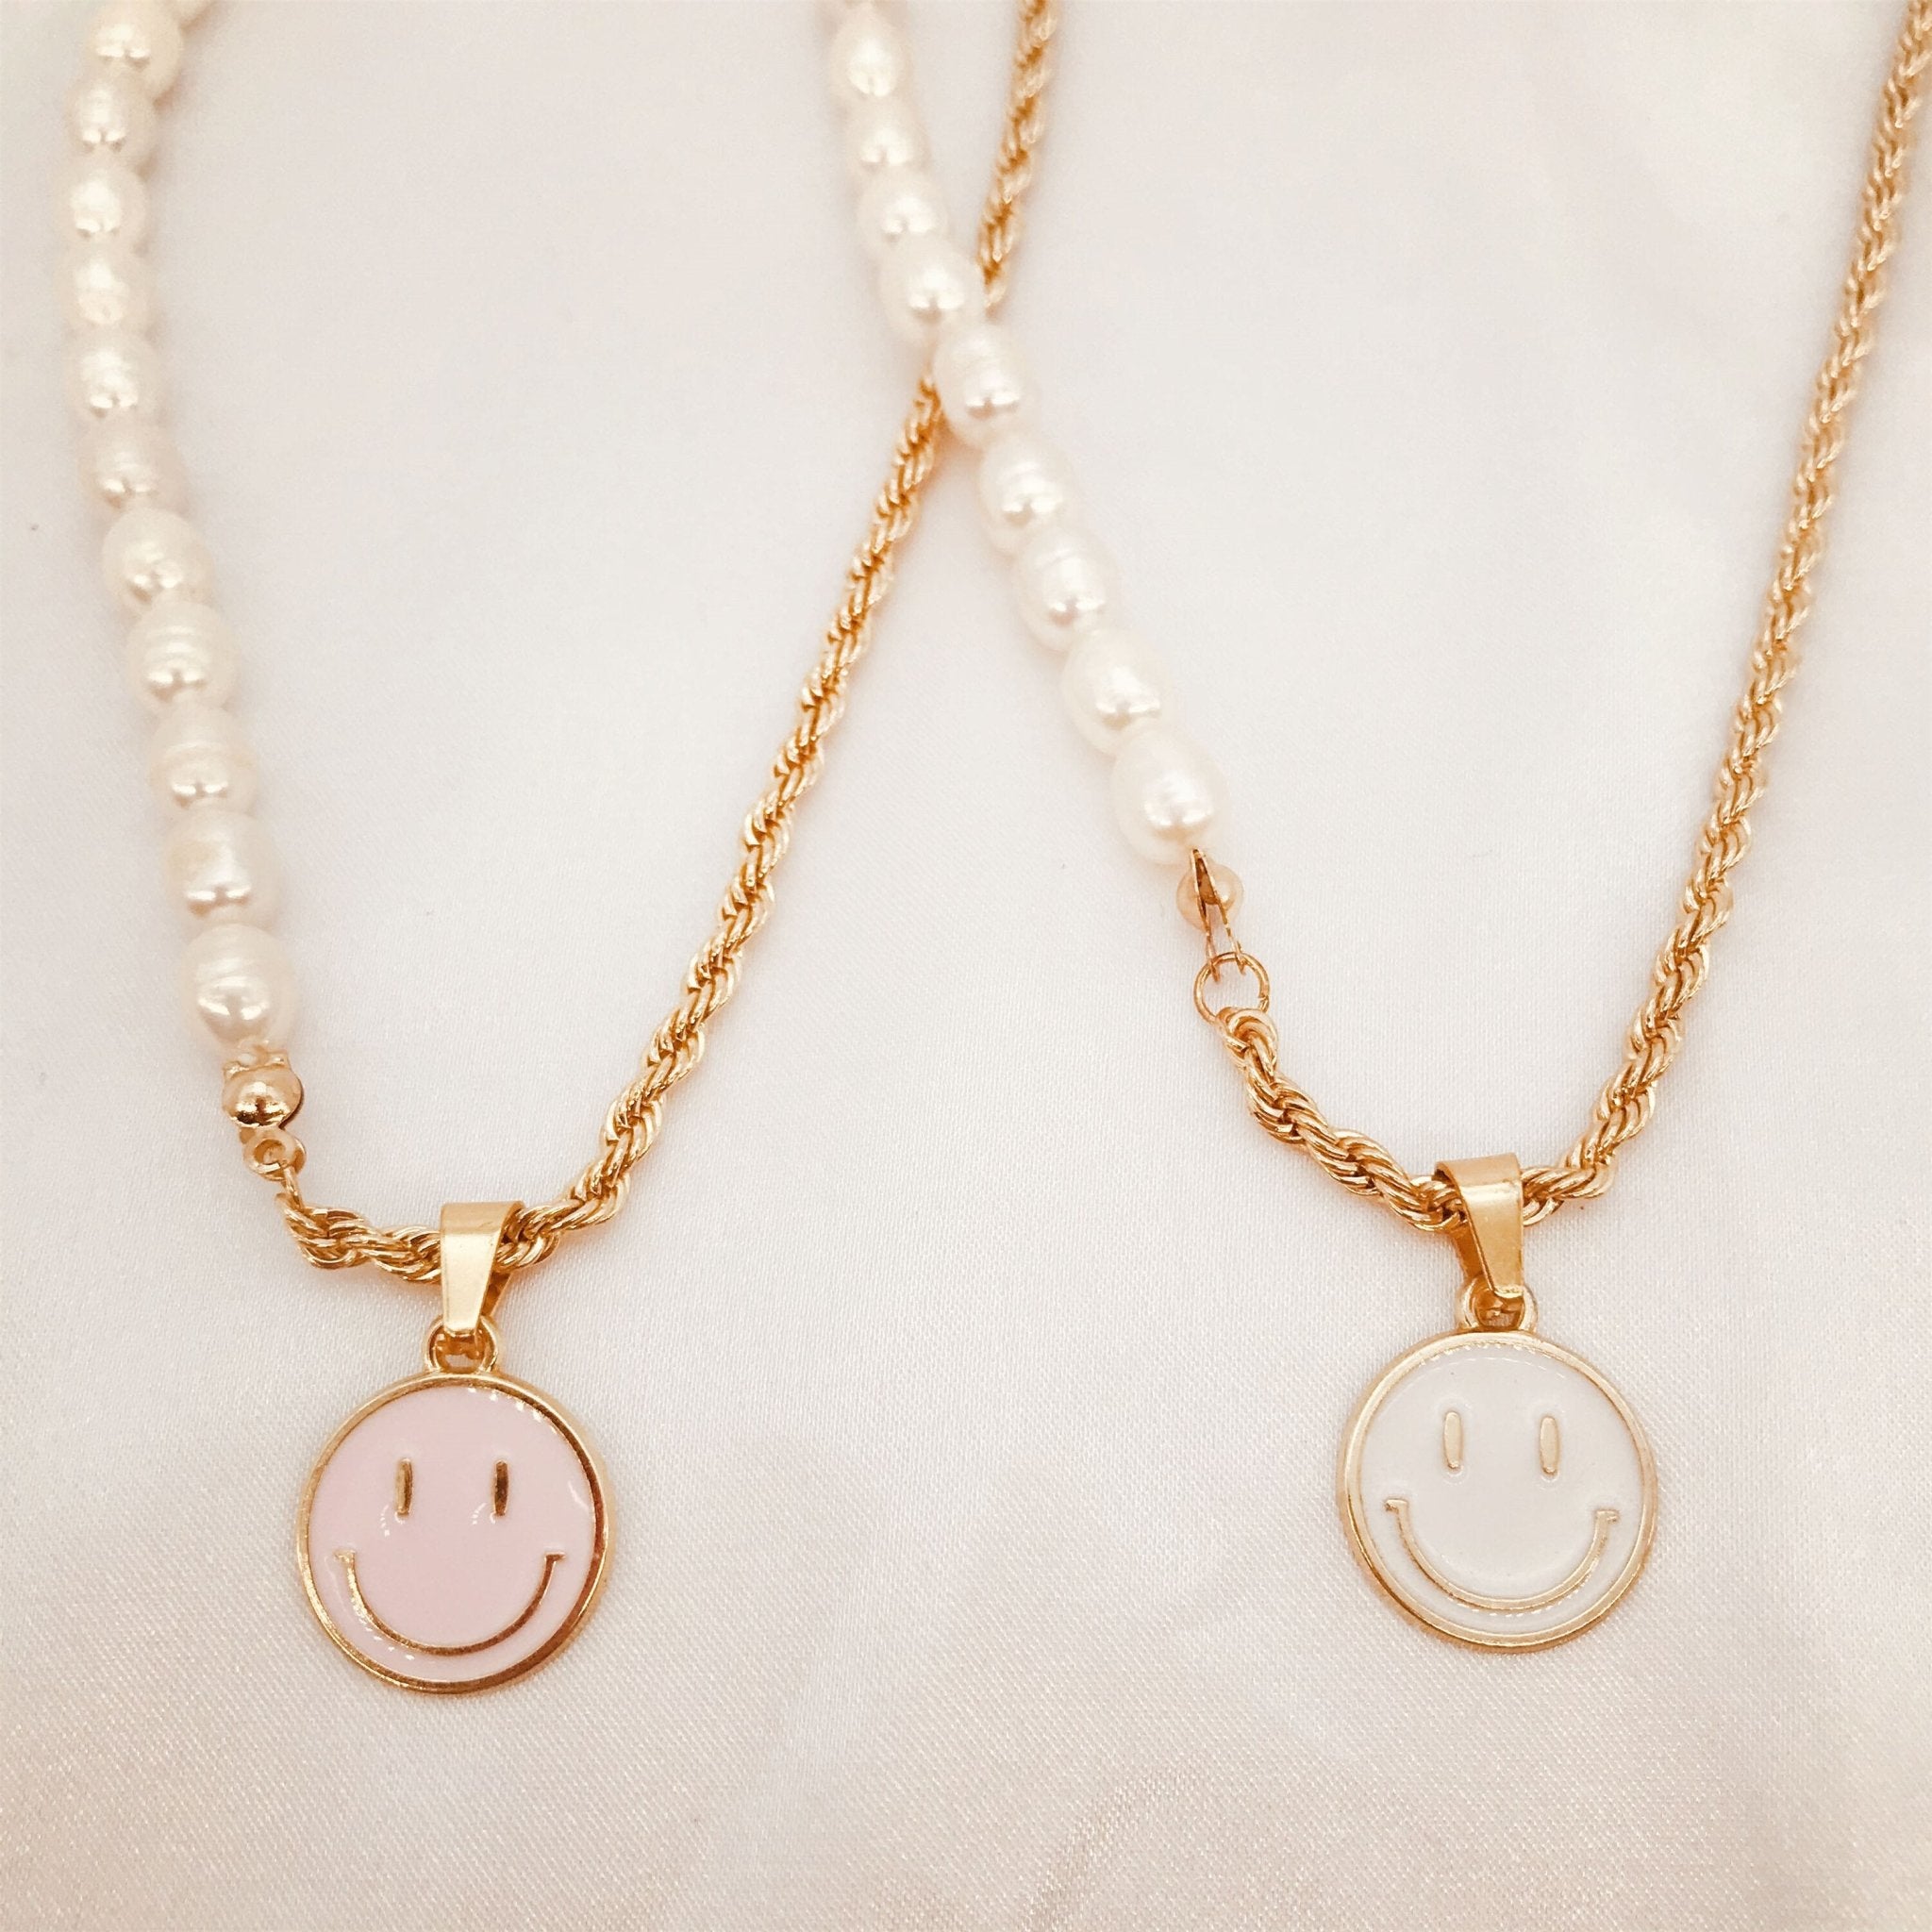 Smiling Face Pendant Necklace Baroque Pearl Necklace - UntamedEgo LLC.